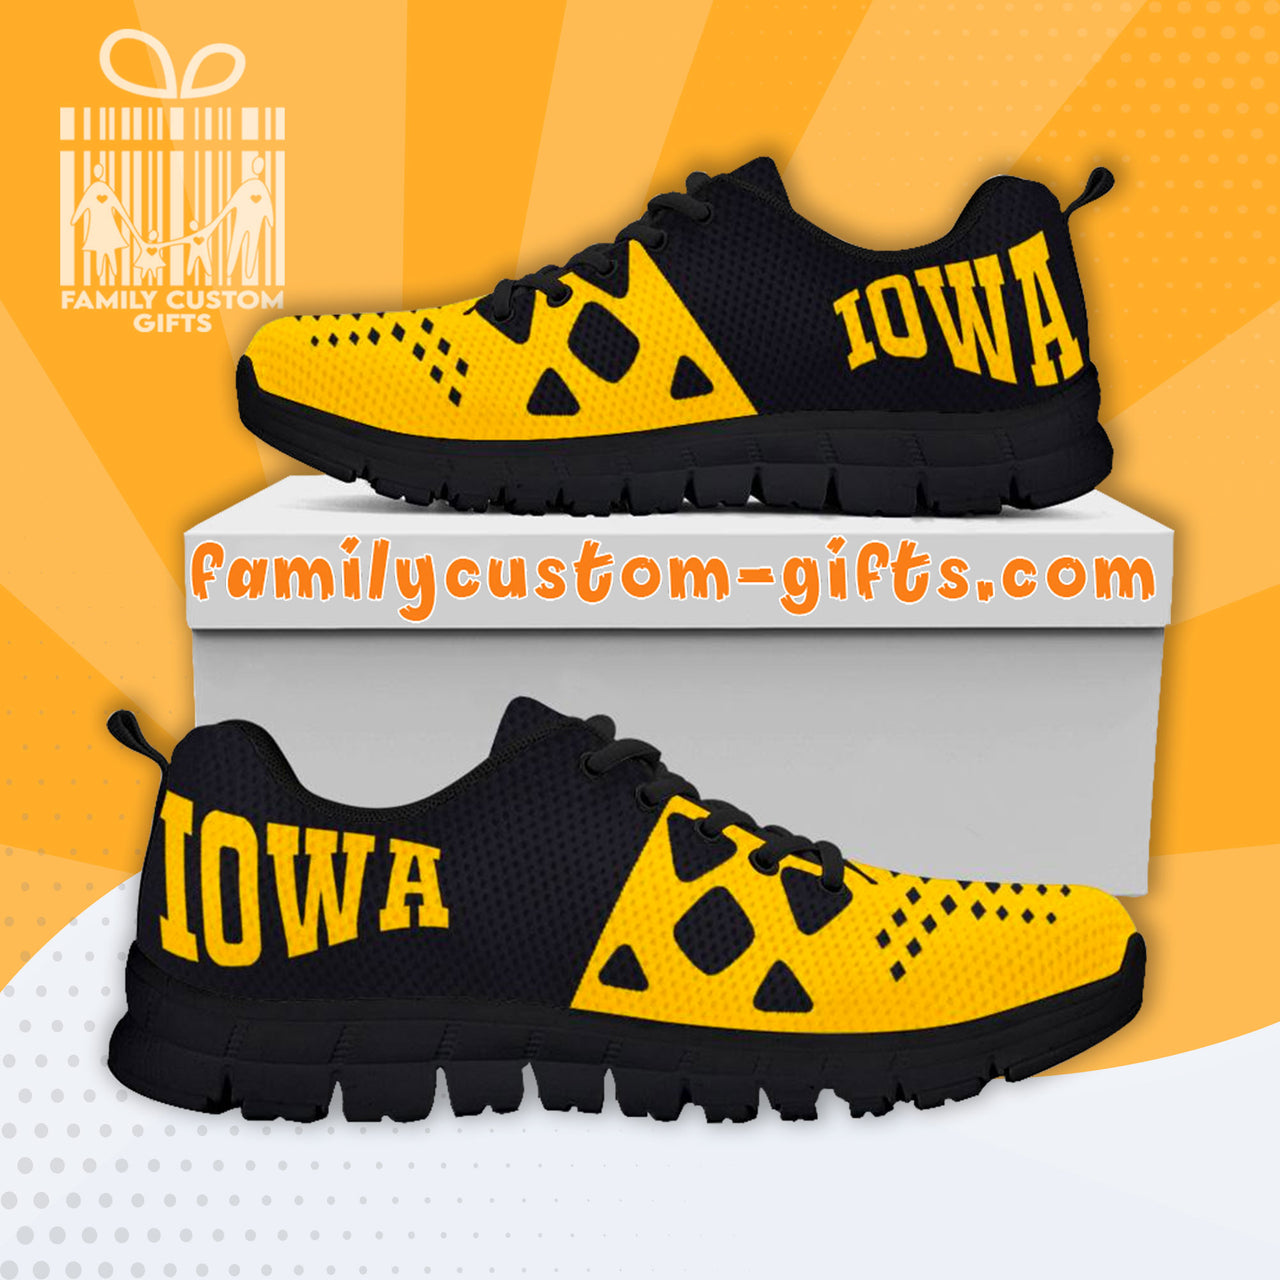 Iowa Custom Shoes for Men Women 3D Print Fashion Sneaker Gifts for Her Him